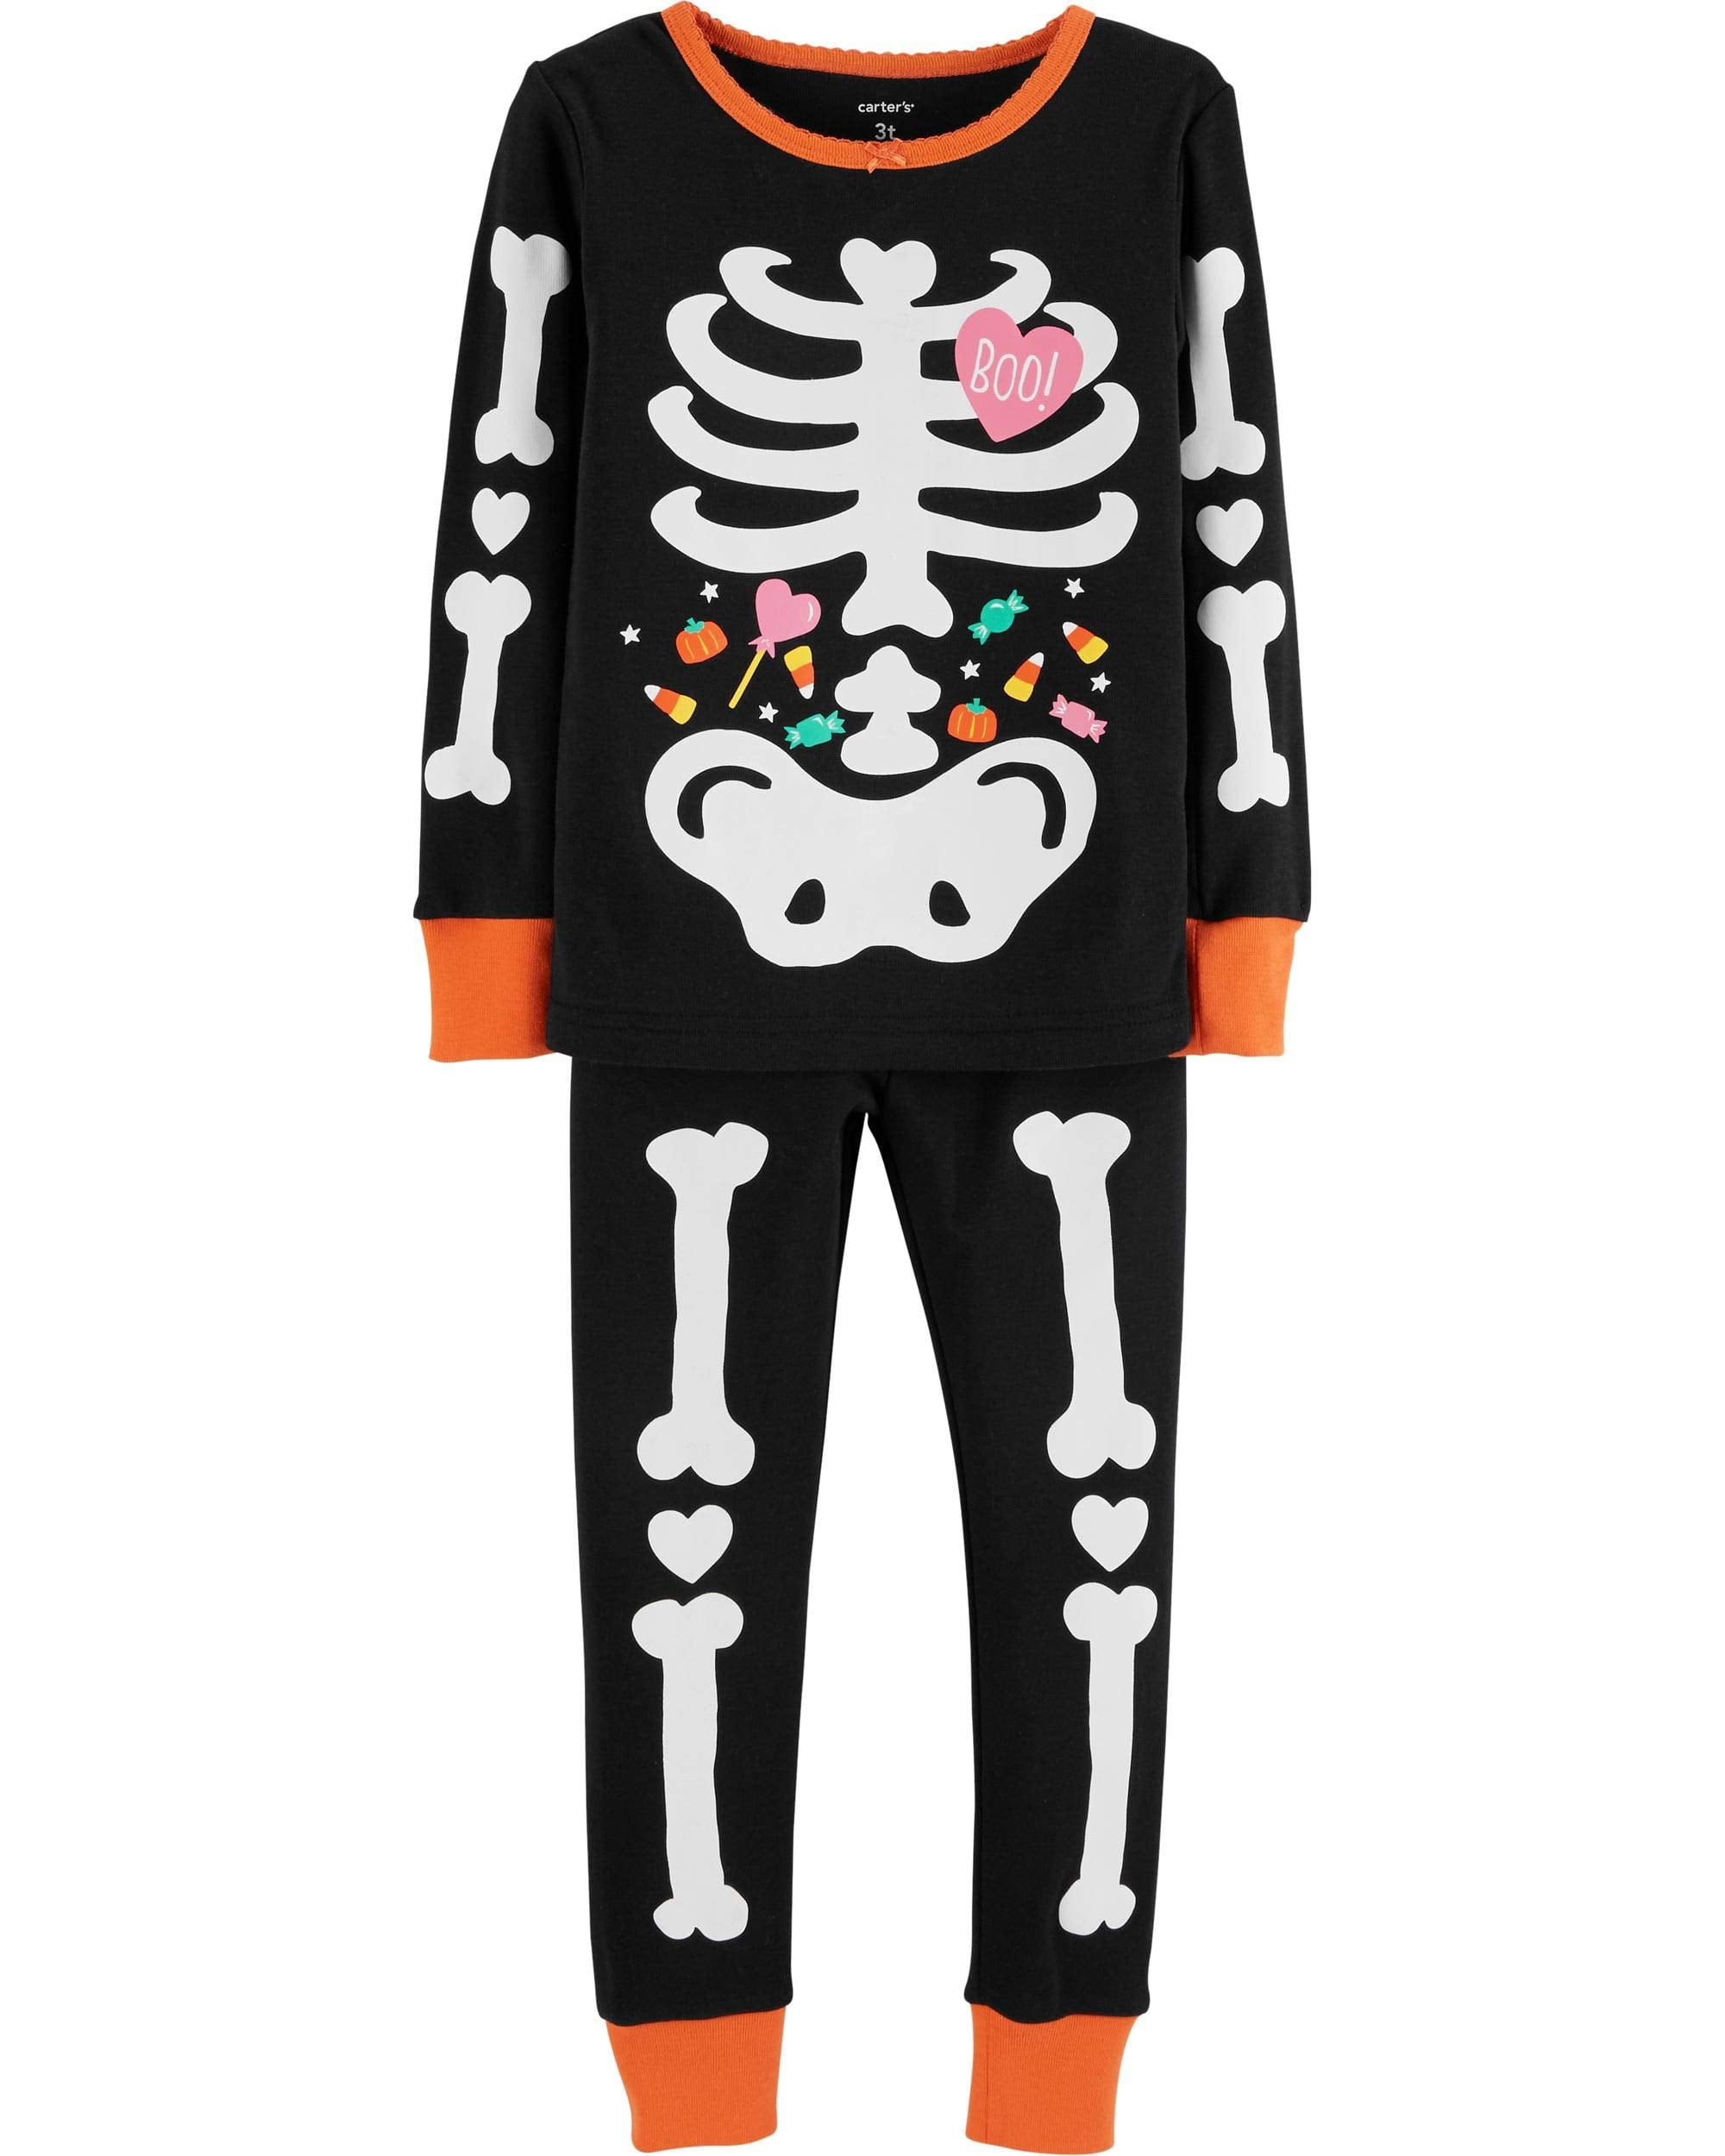 NWT Gymboree Halloween Skeleton Pajamas Costume 6-12 Month Glow in the Dark